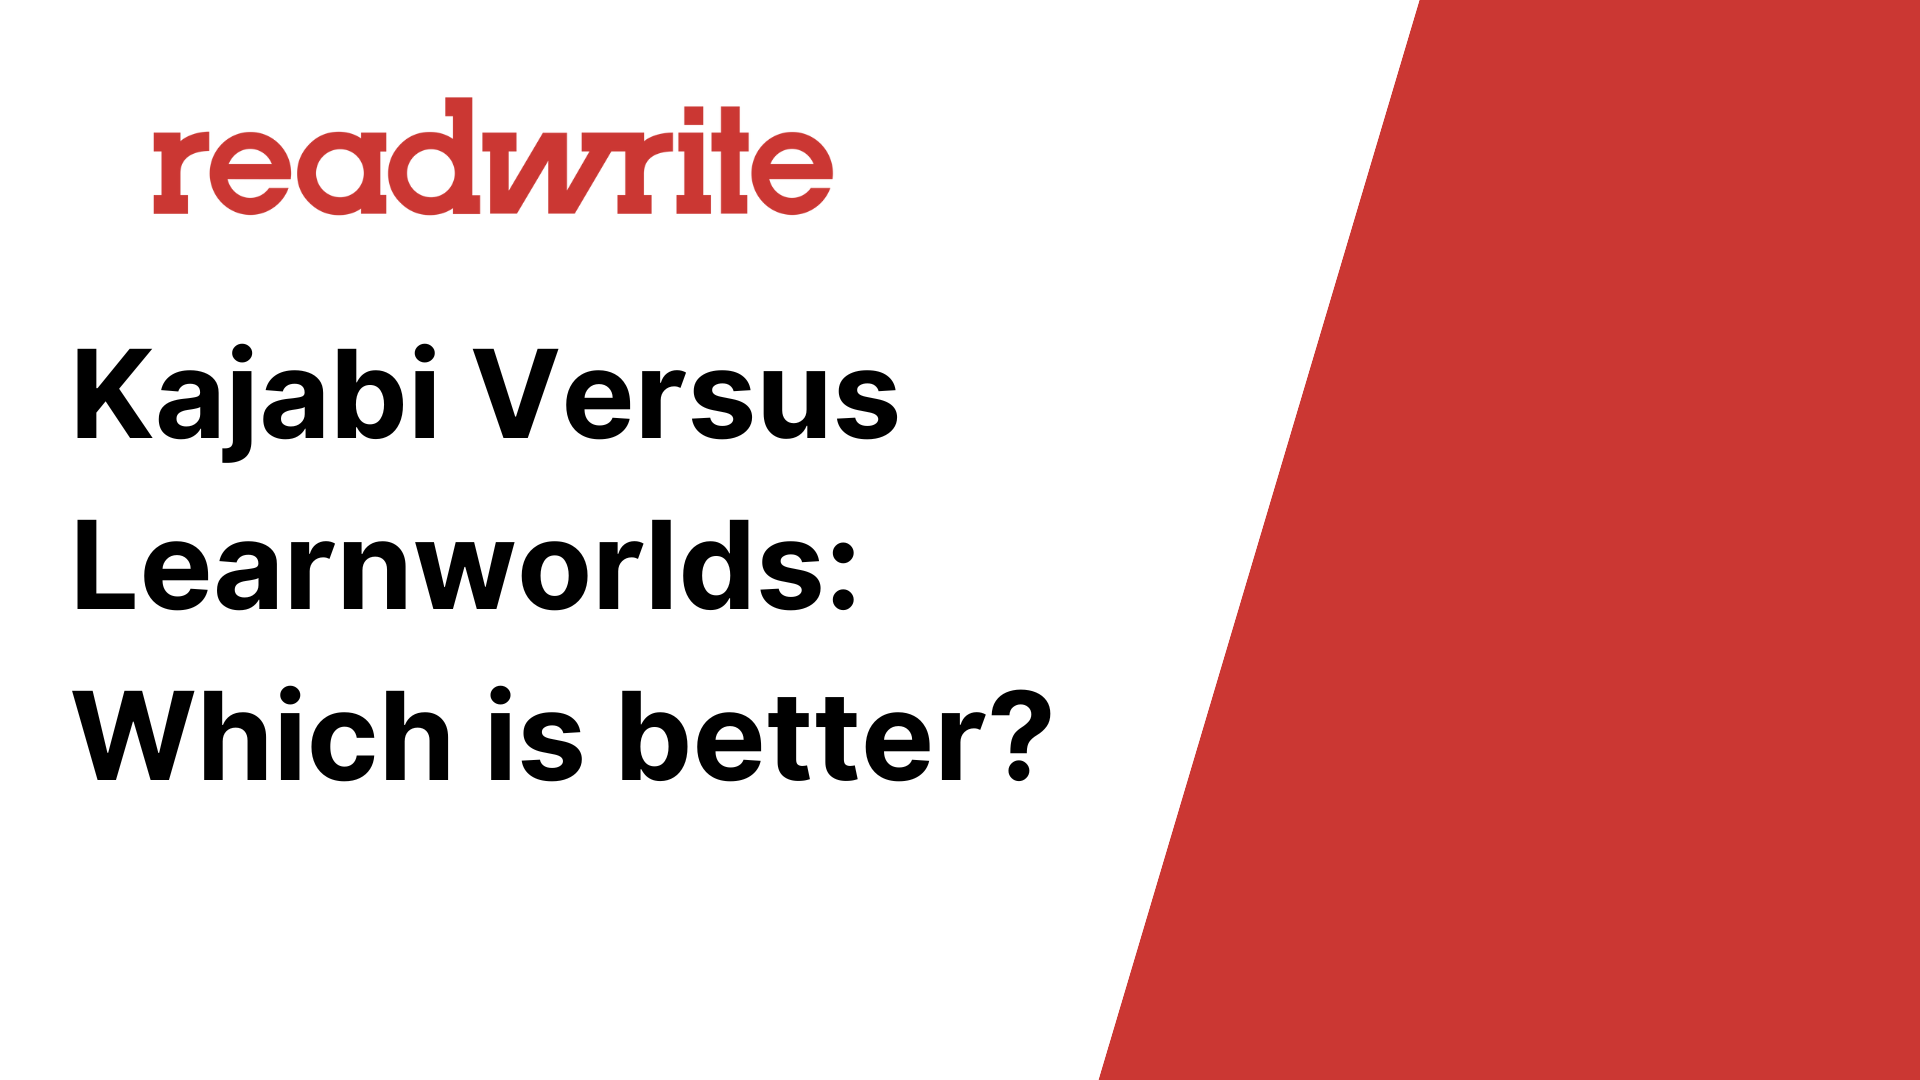 Kajabi Versus Learnworlds: Which is Better? - readwrite.com